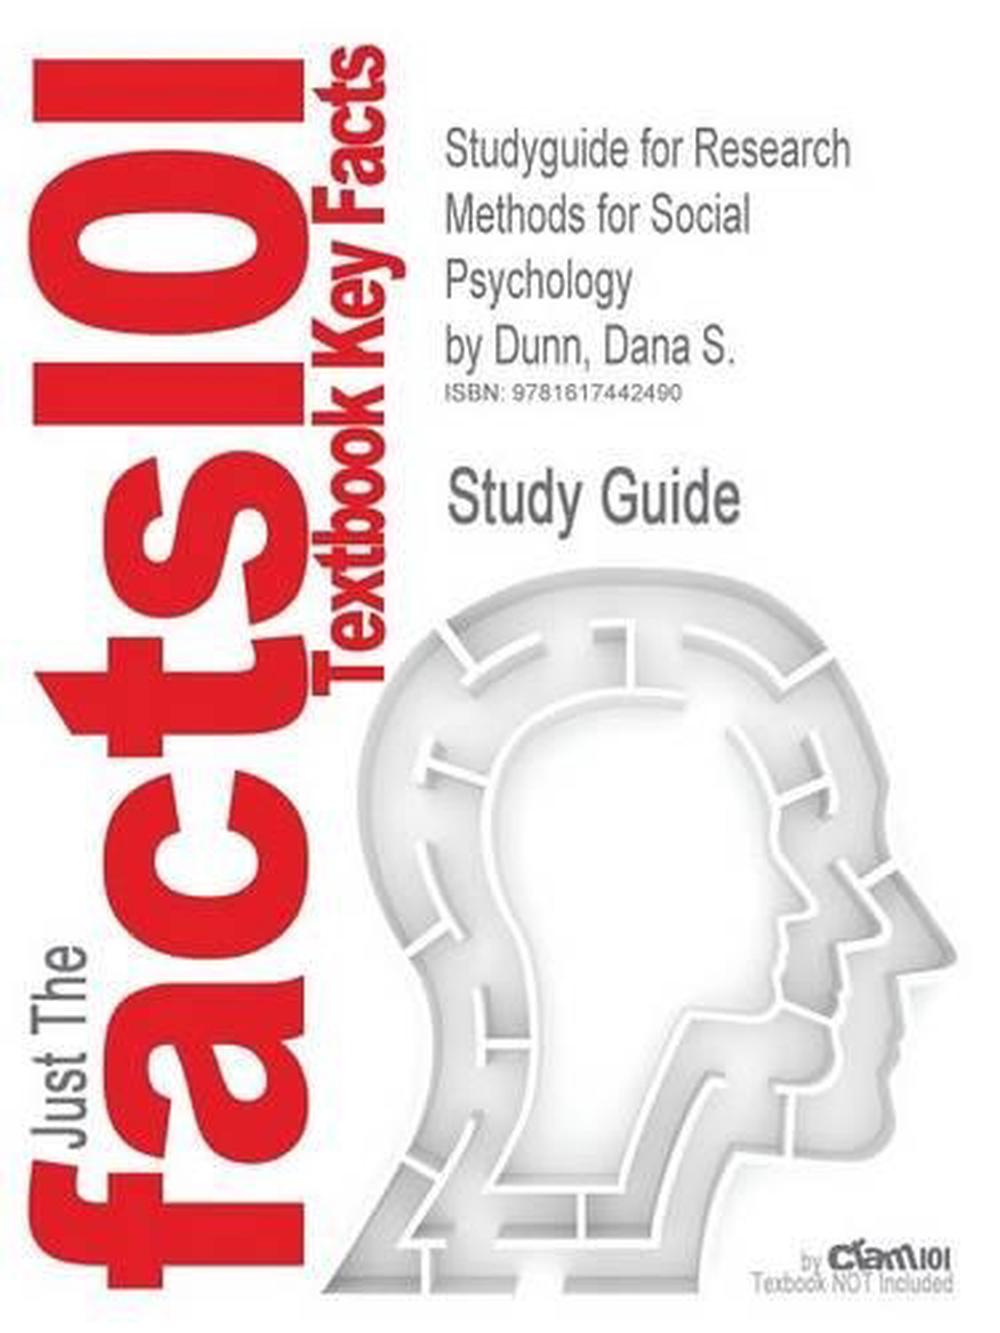 social psychology research studies